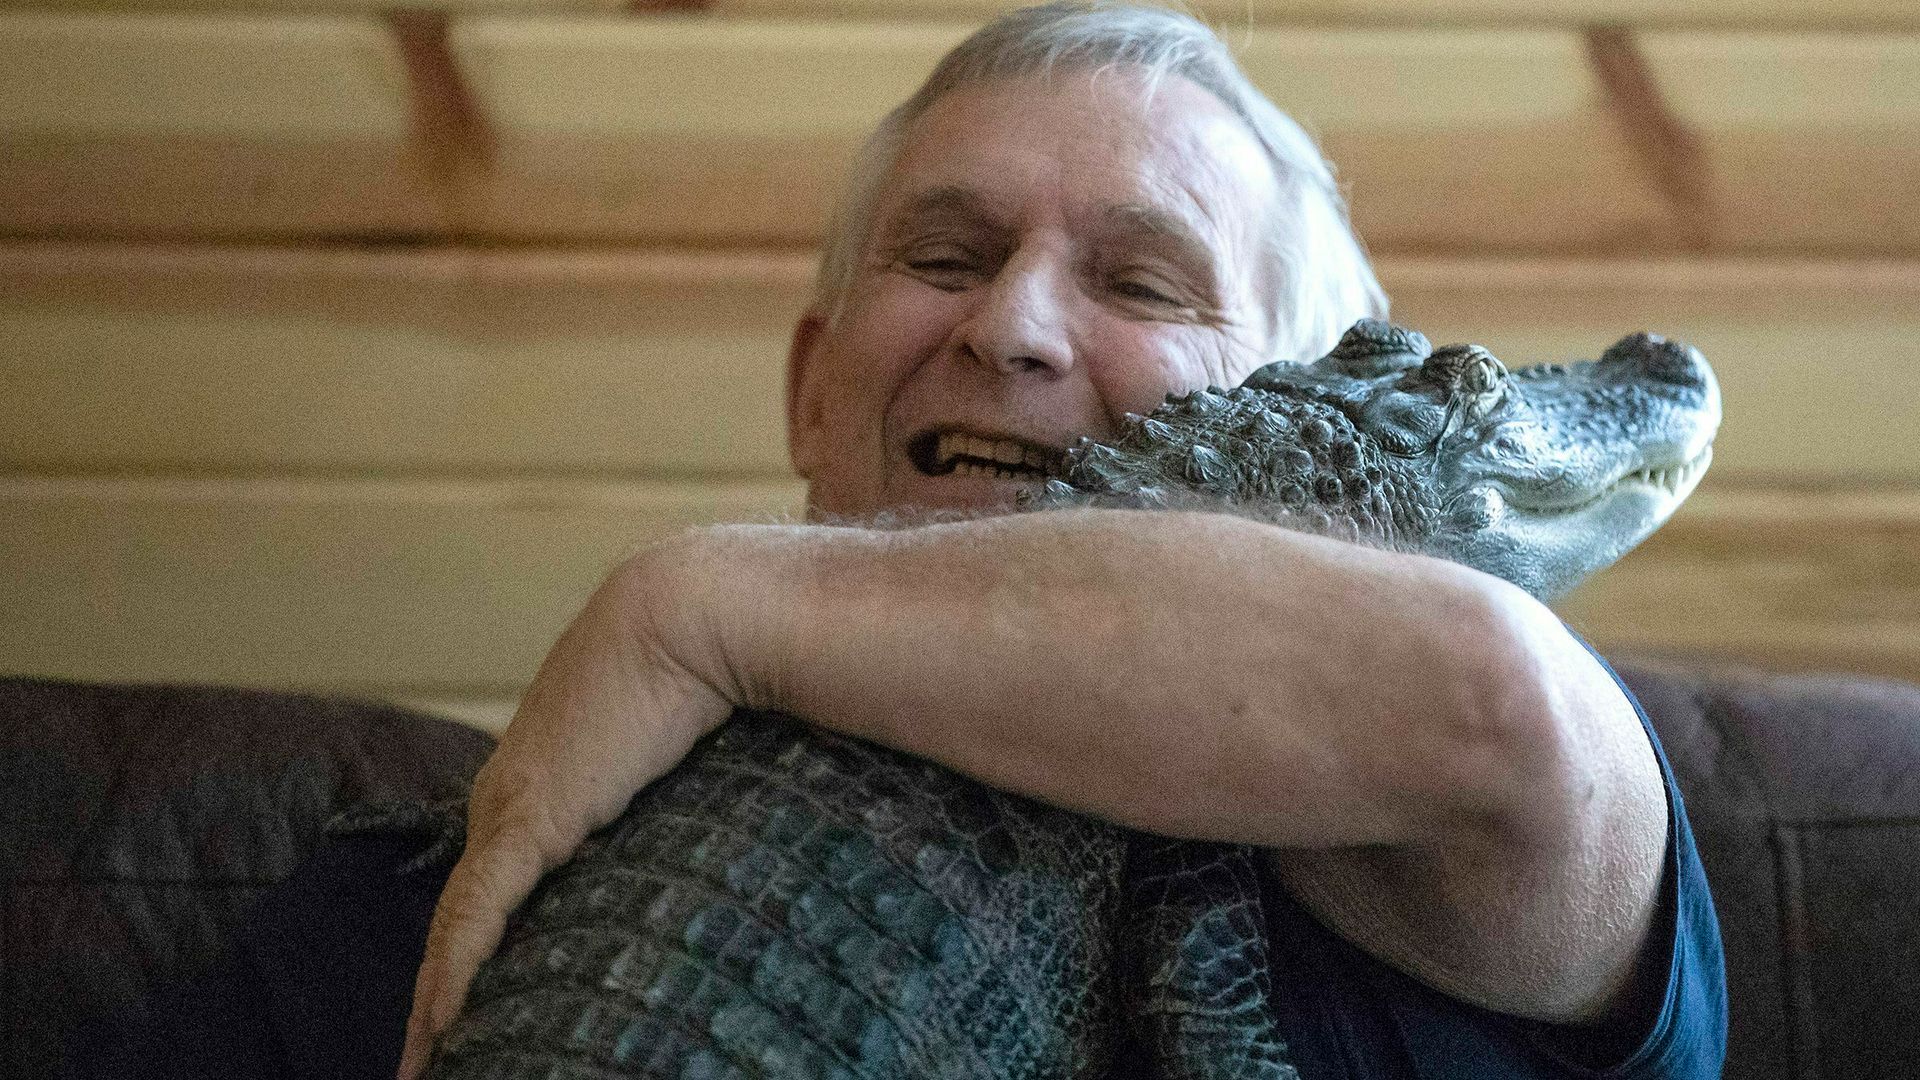 Owner distraught after 'emotional support' alligator goes missing